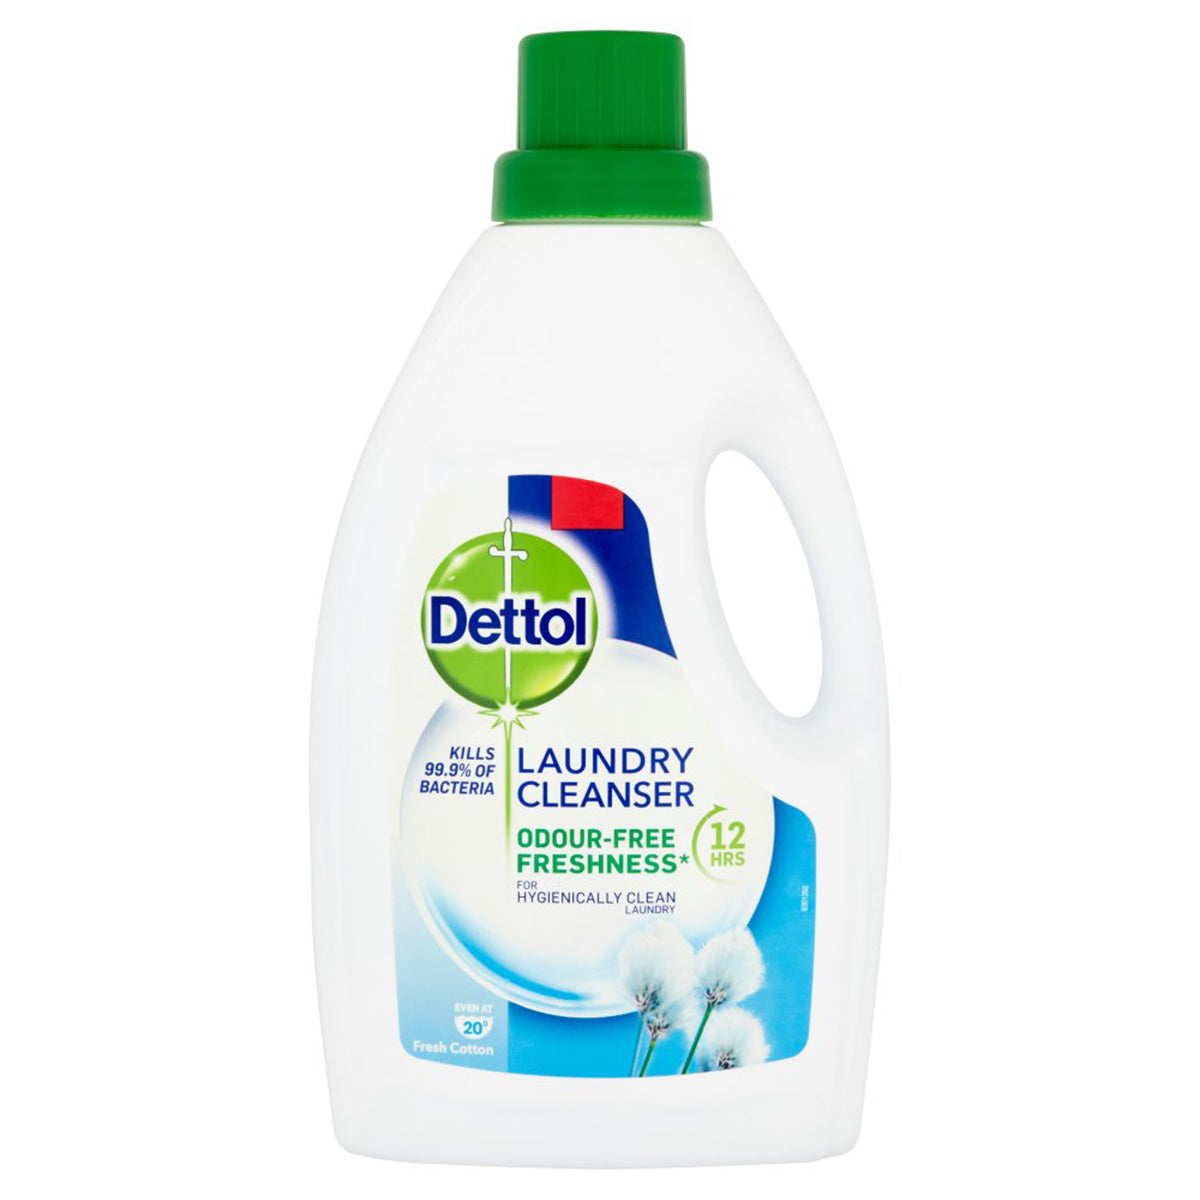 Dettol - Laundry Cleanser Fresh Cotton - 1L - Continental Food Store